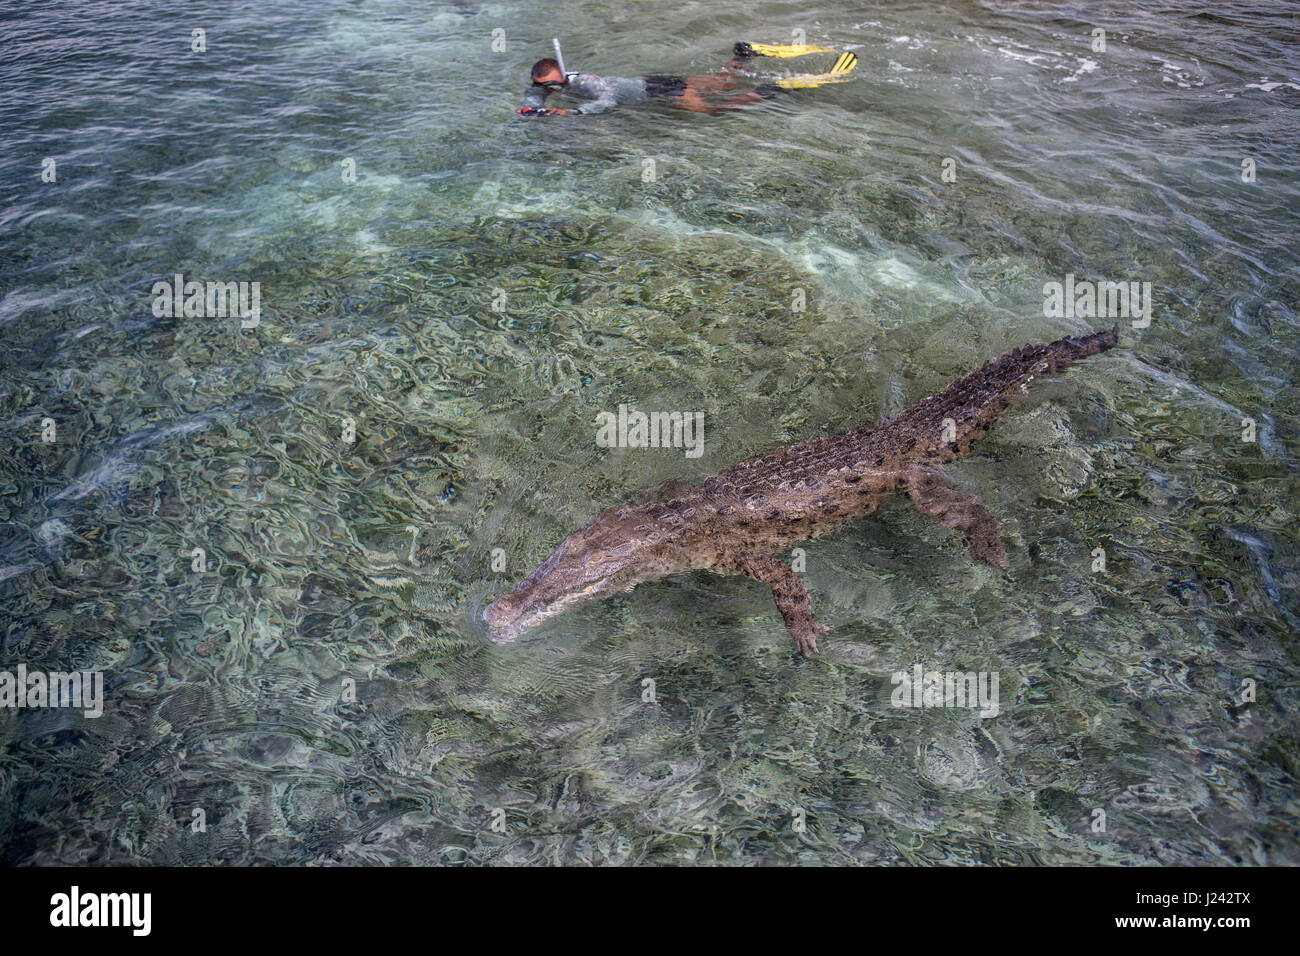 Snorkeler swims with crocodile, Cuba Stock Photo